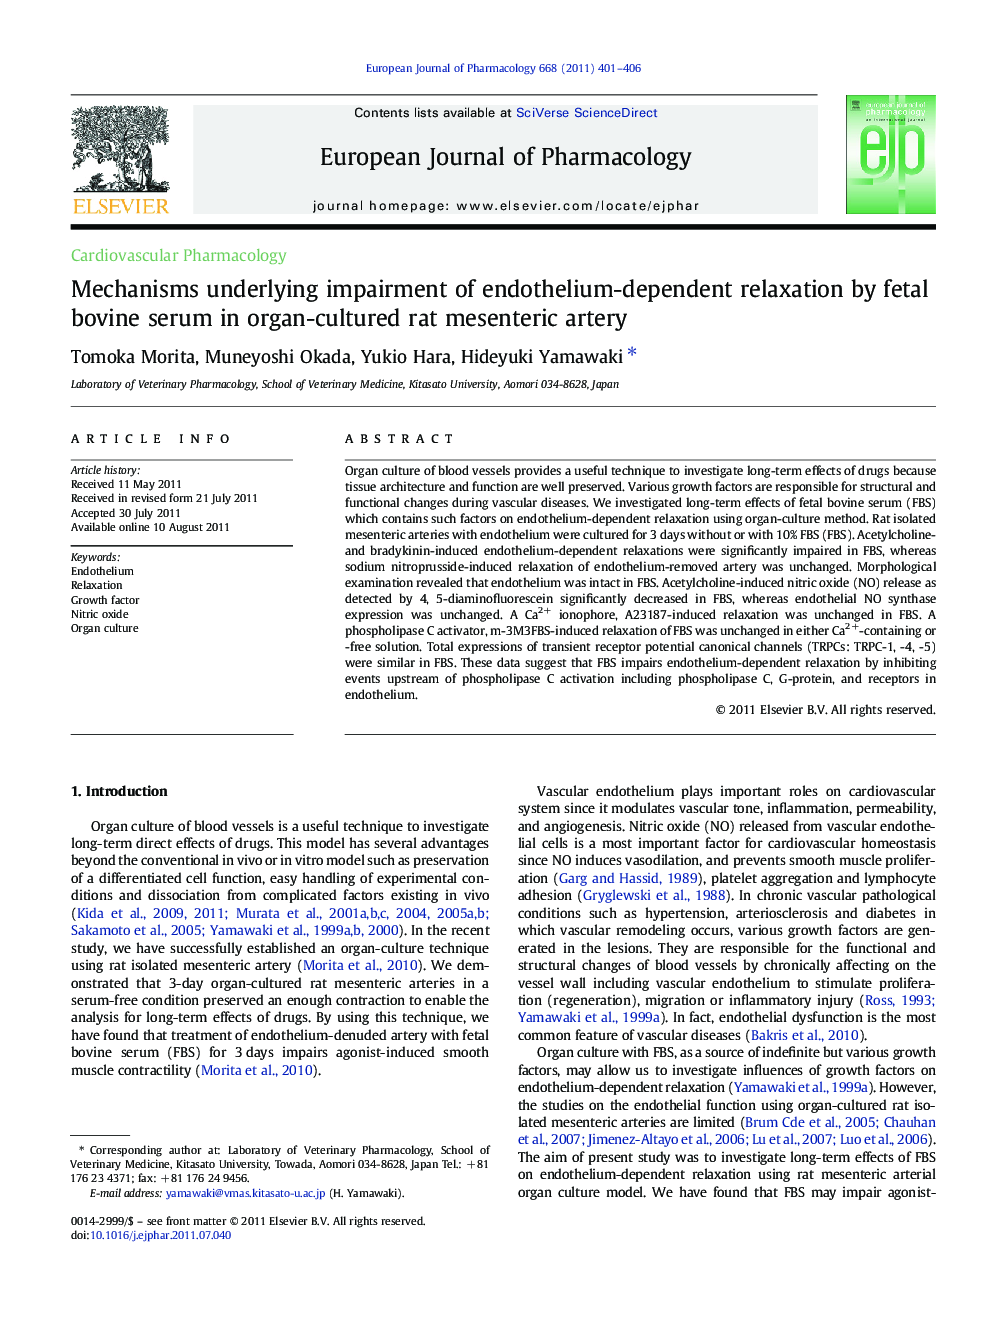 Mechanisms underlying impairment of endothelium-dependent relaxation by fetal bovine serum in organ-cultured rat mesenteric artery